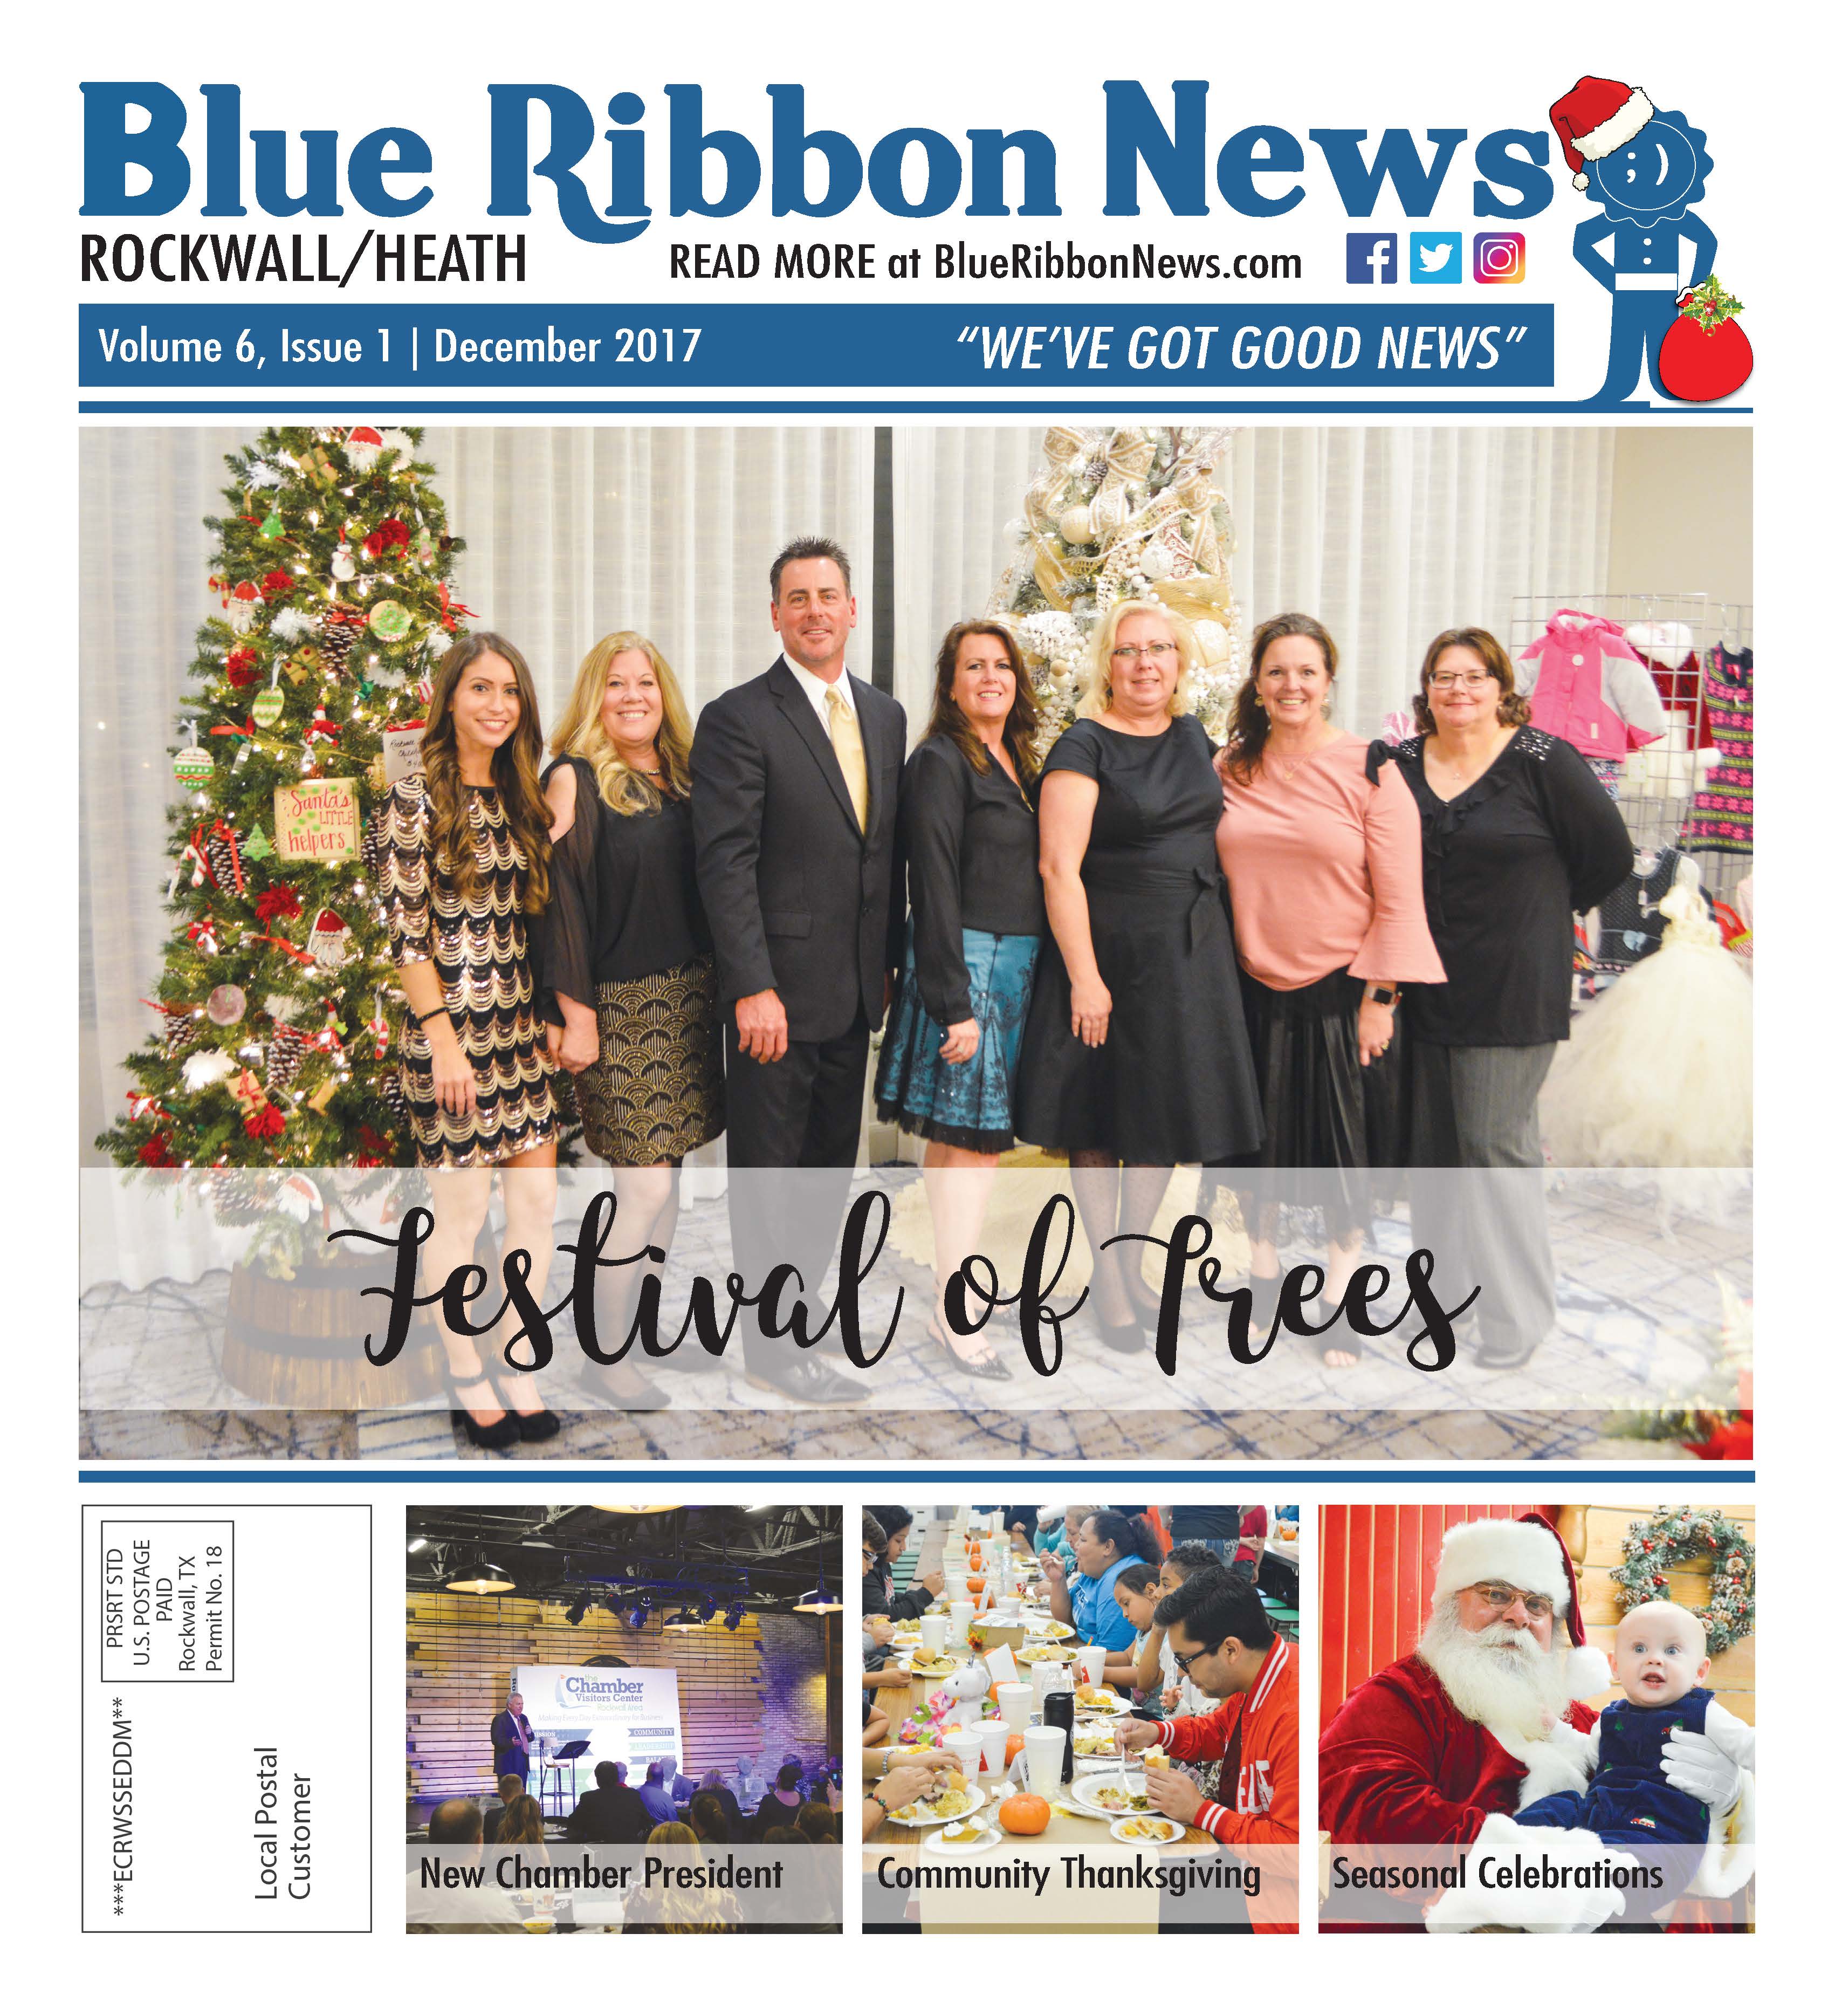 Blue Ribbon News holiday print edition hits mailboxes throughout Rockwall, Heath